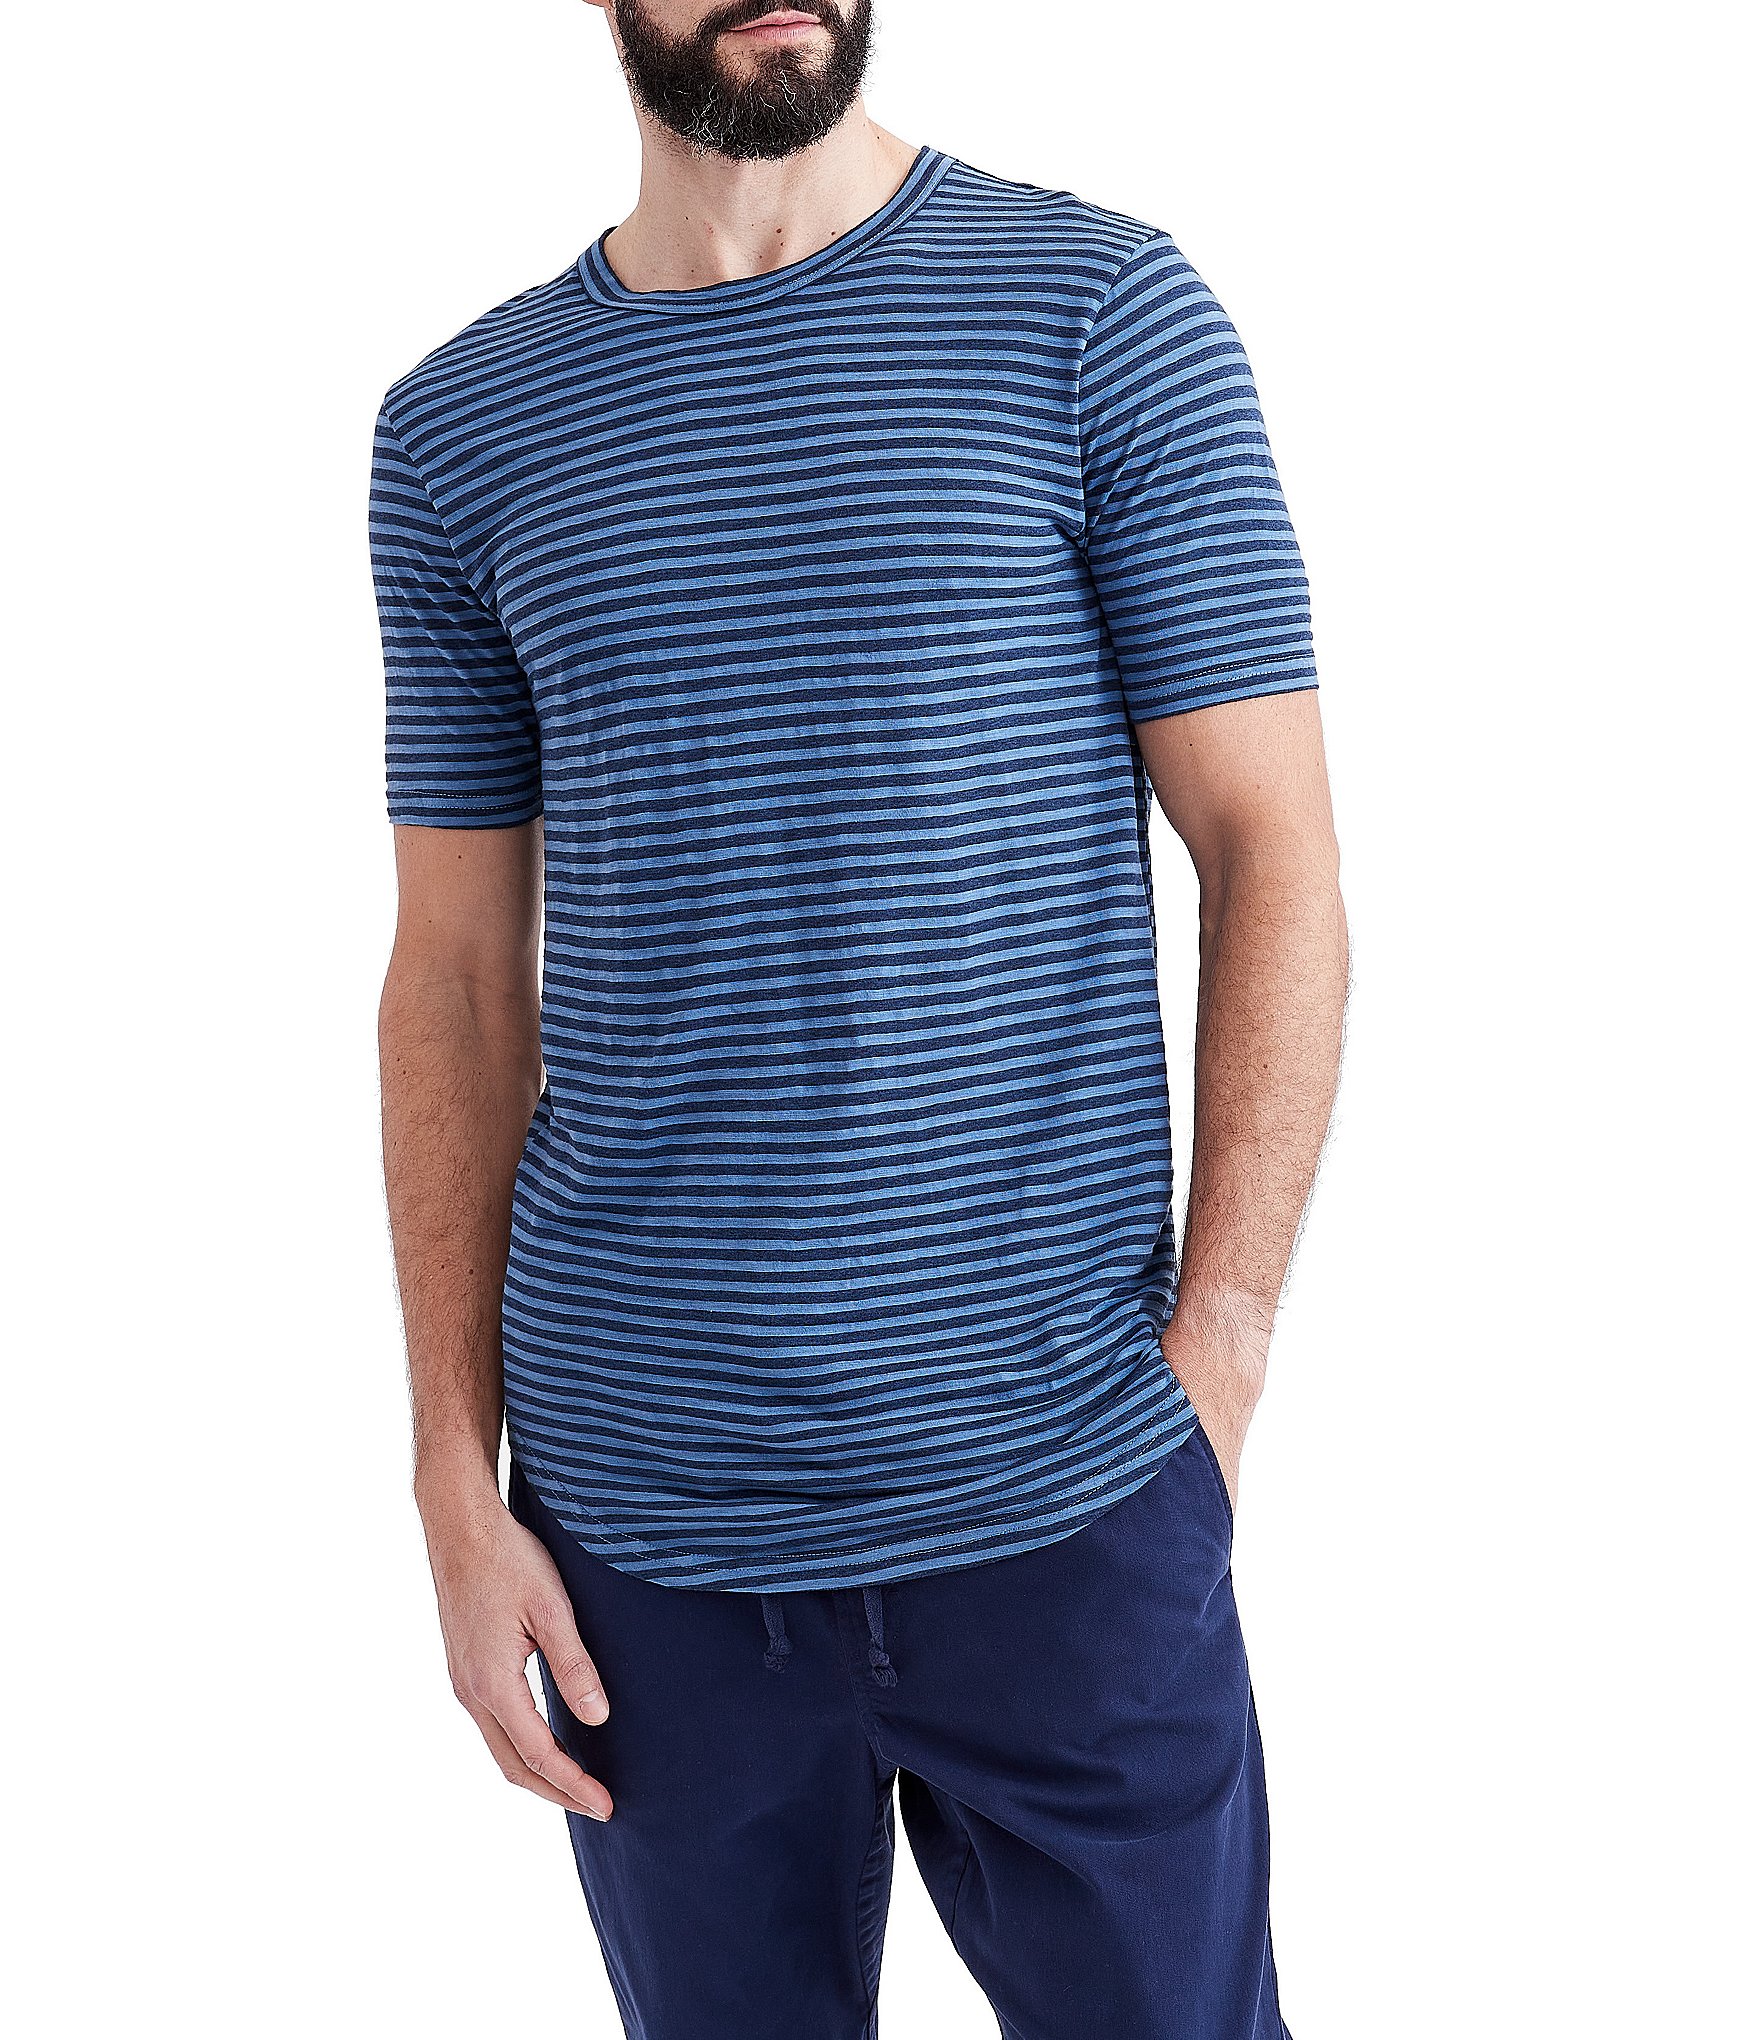 Goodlife Slim-Fit Striped Scallop Crew Short-Sleeve T-Shirt | Dillard's